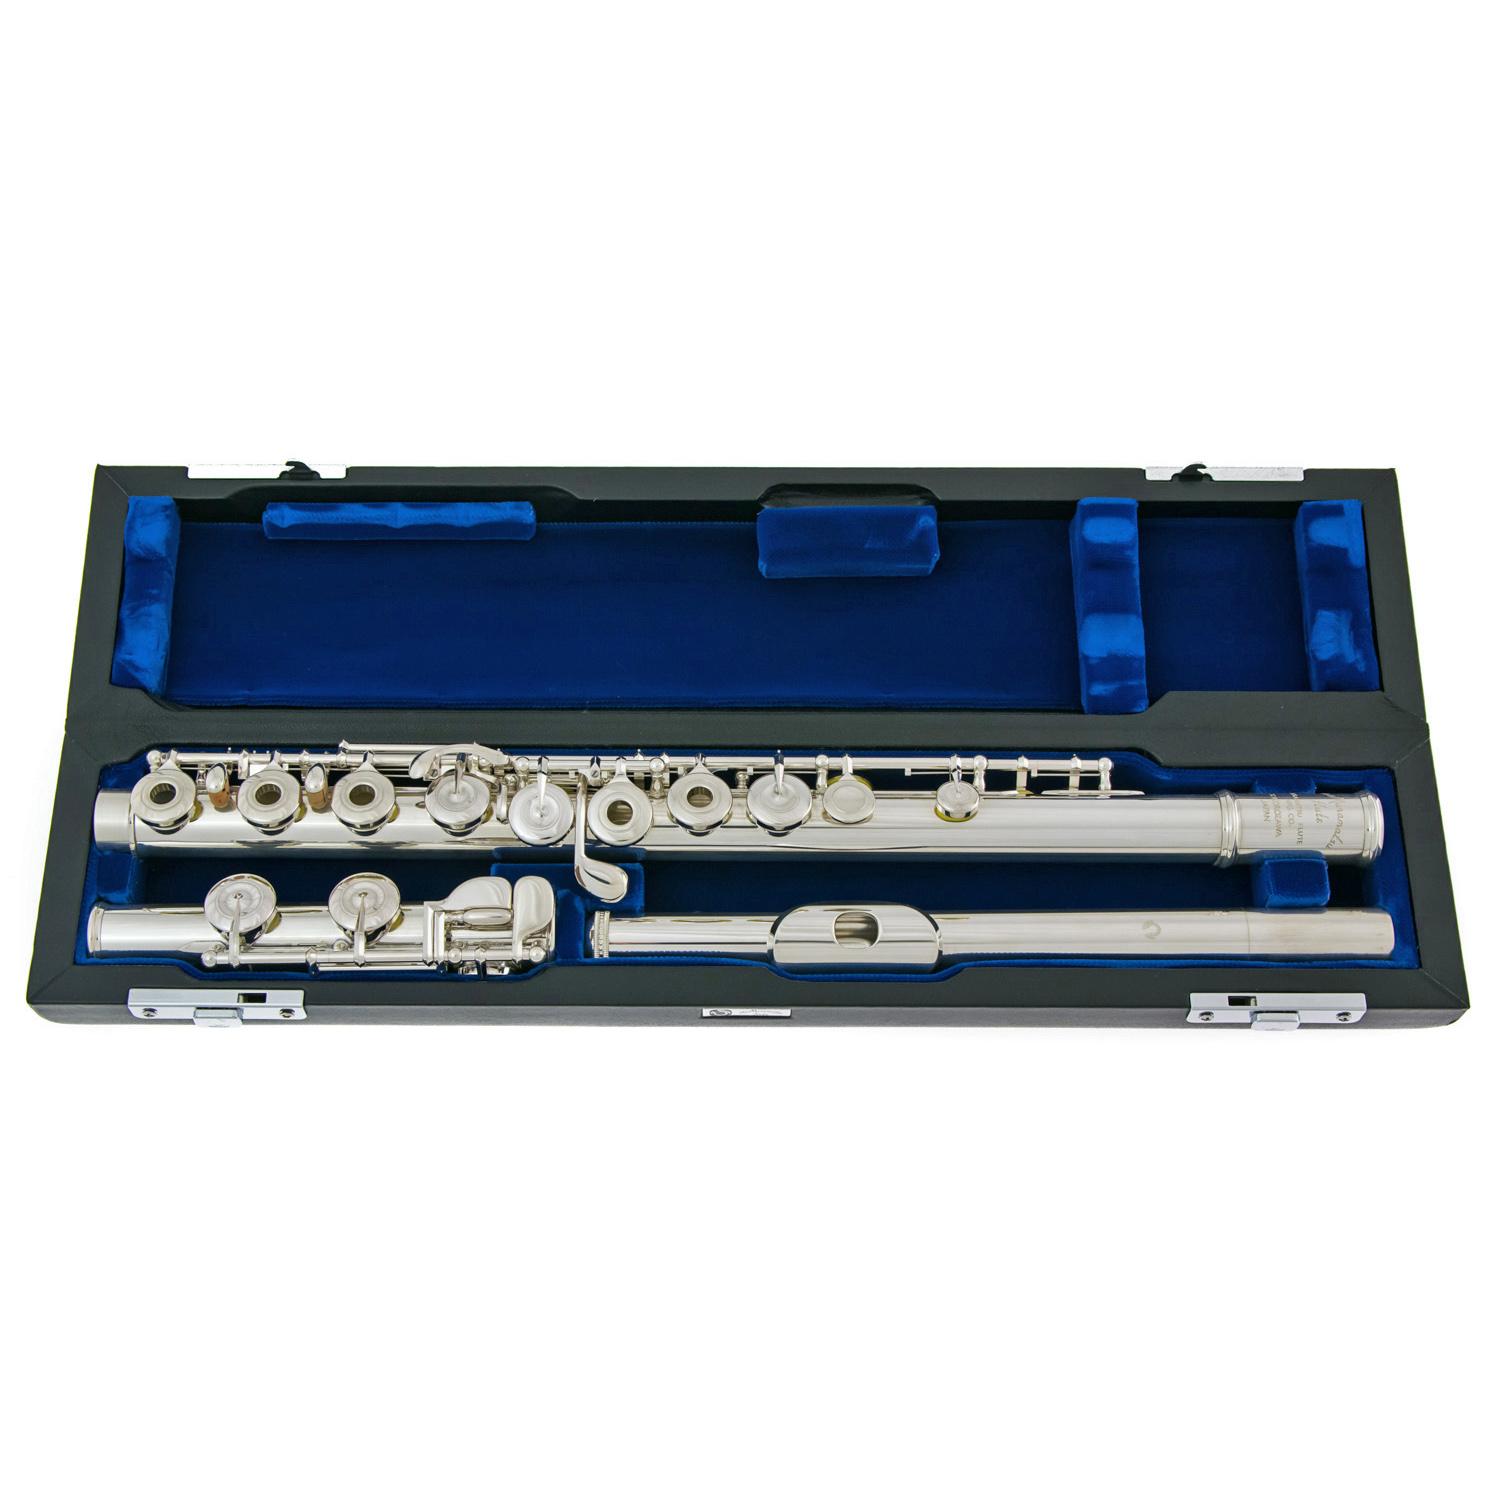 Muramatsu Flute - GX III CE